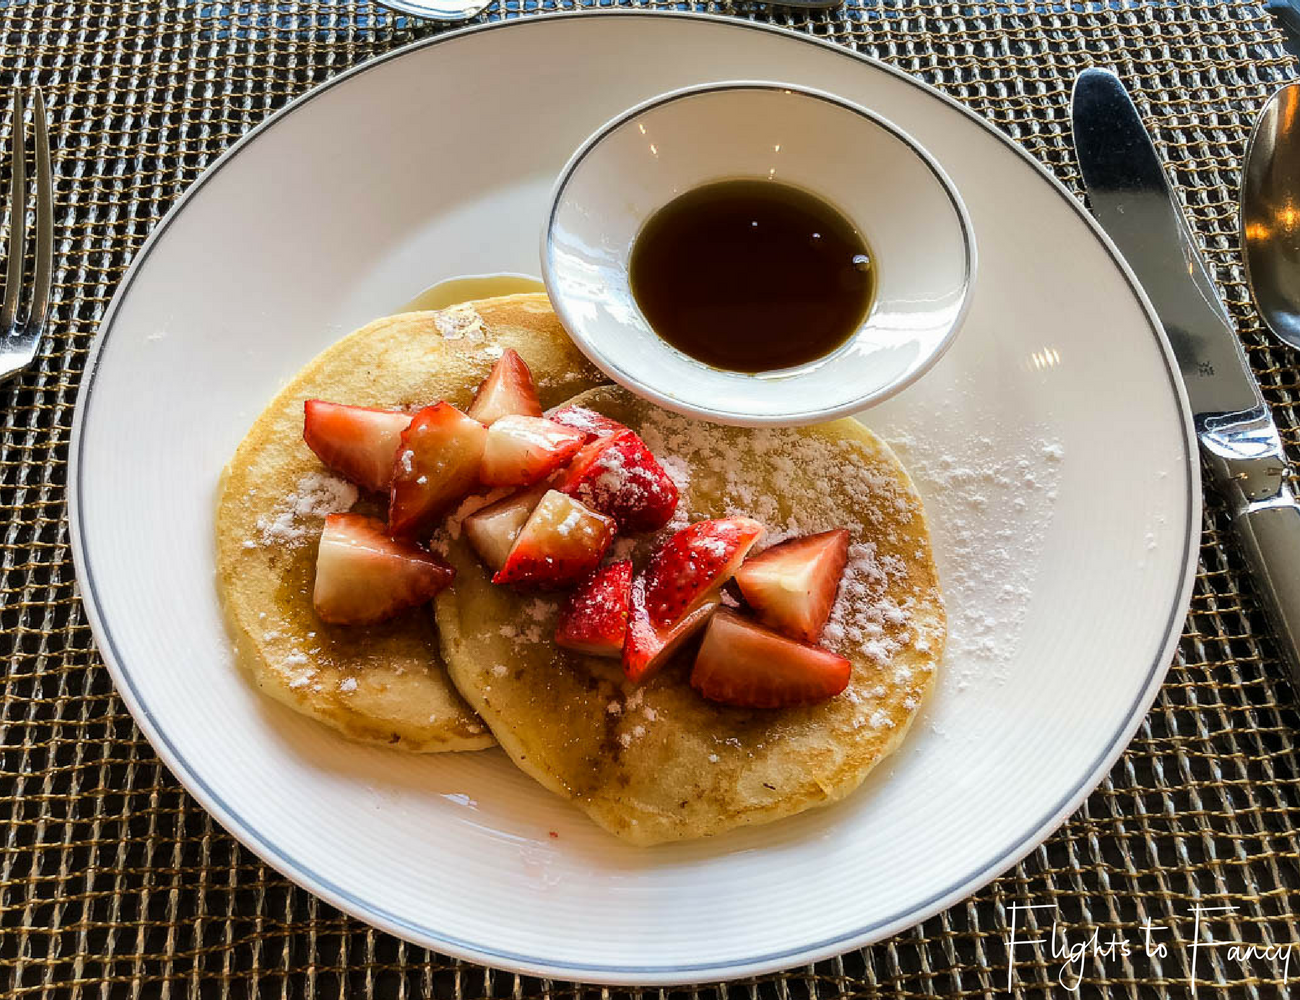 Flights to Fancy - Fairmont Makati Gold Lounge Breakfast Pancakes